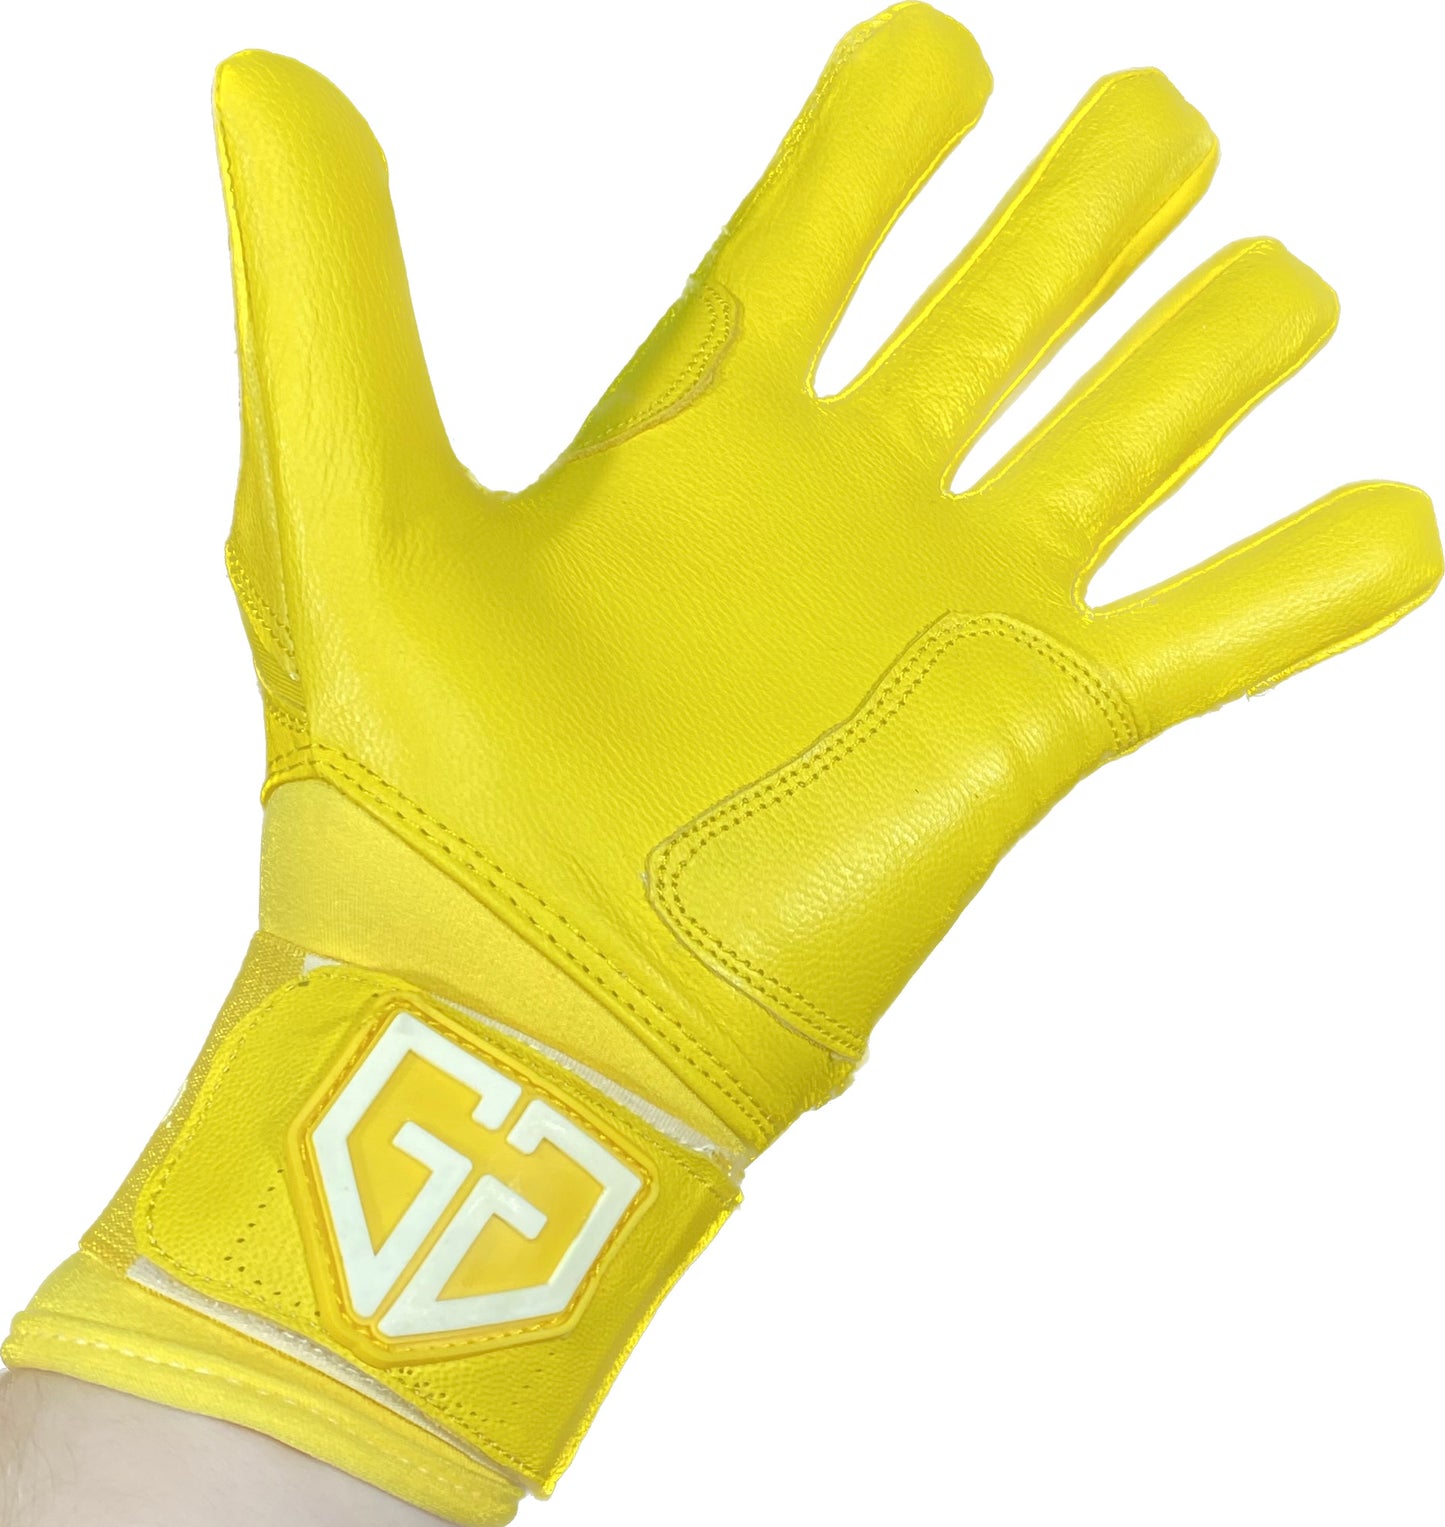 Extended Cuff Cabretta Batting Gloves Yellow